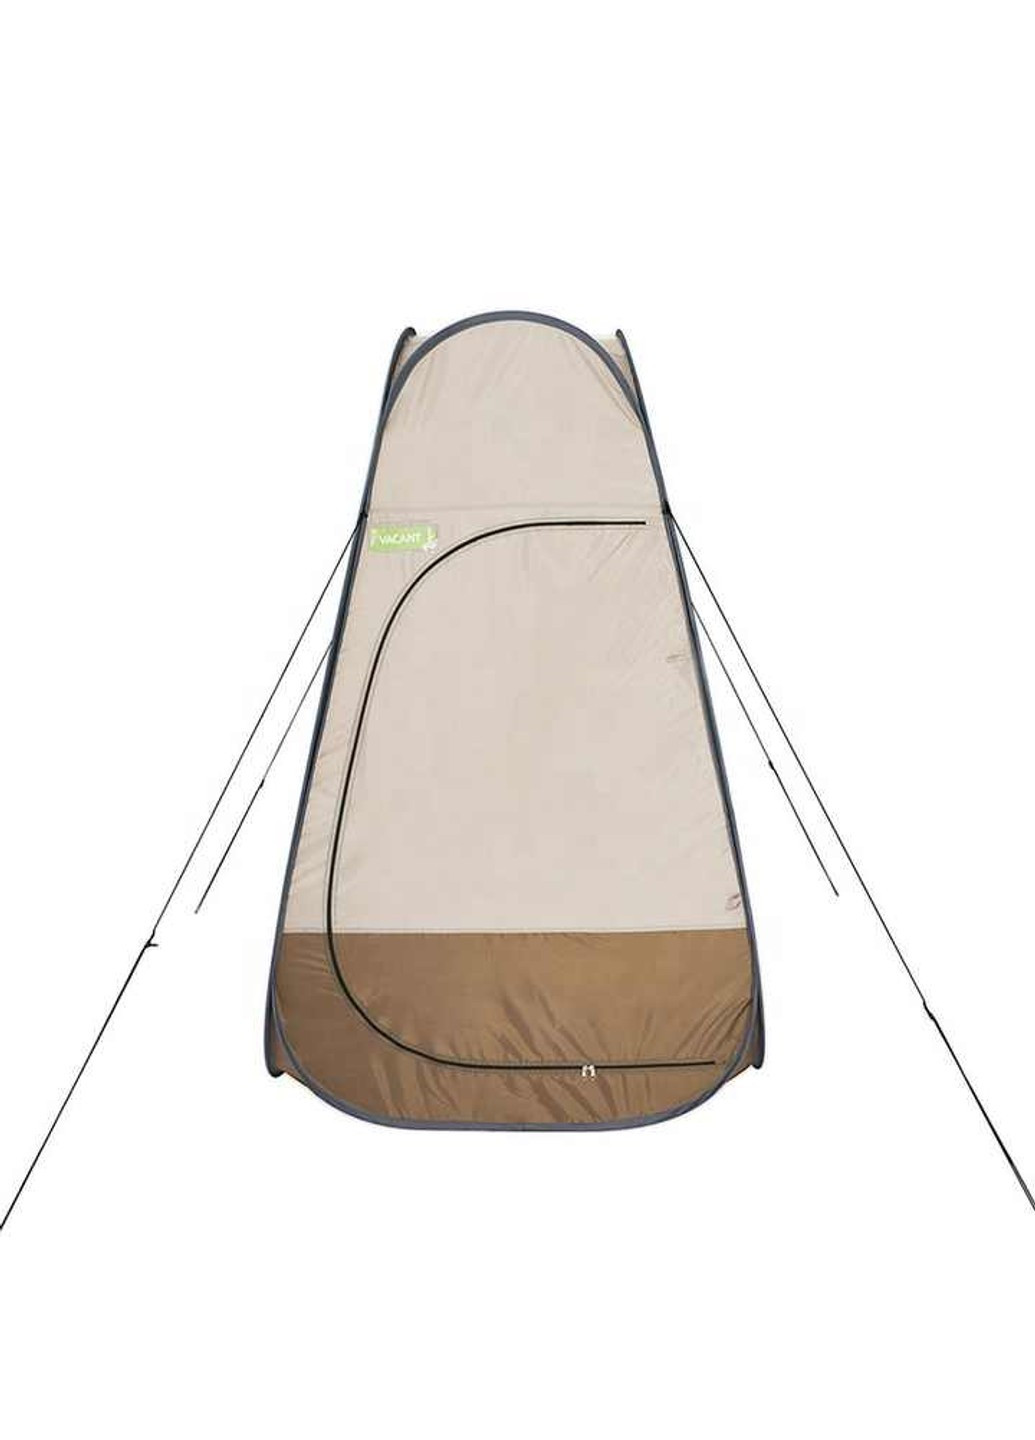 Намет санітарний Utility Tent 210T polyester NH17Z002-P brown Naturehike (258966618)